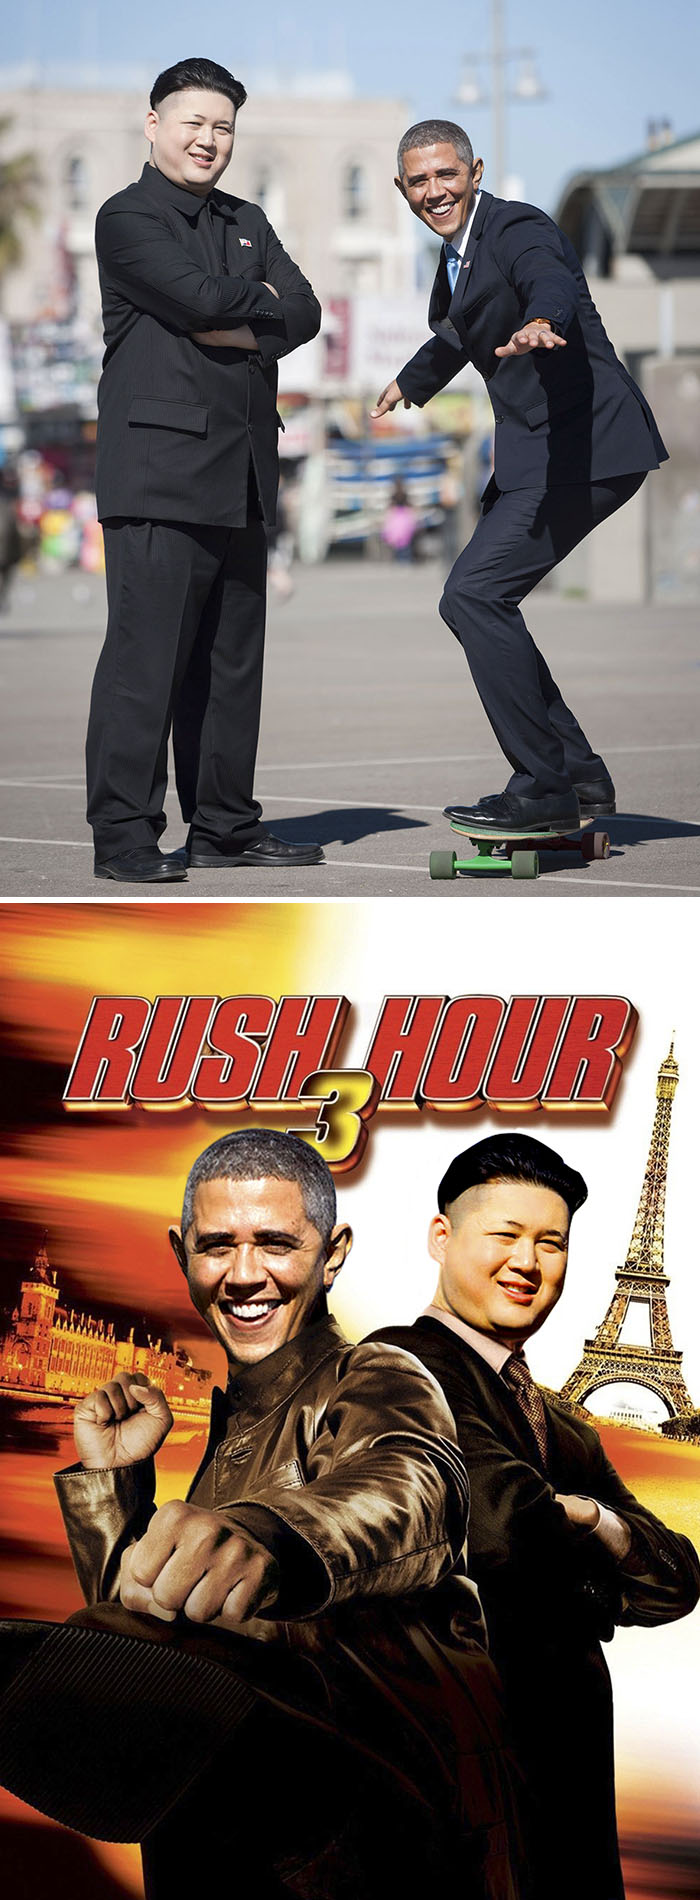 Barack Obama And Kim Jong Un Lookalikes